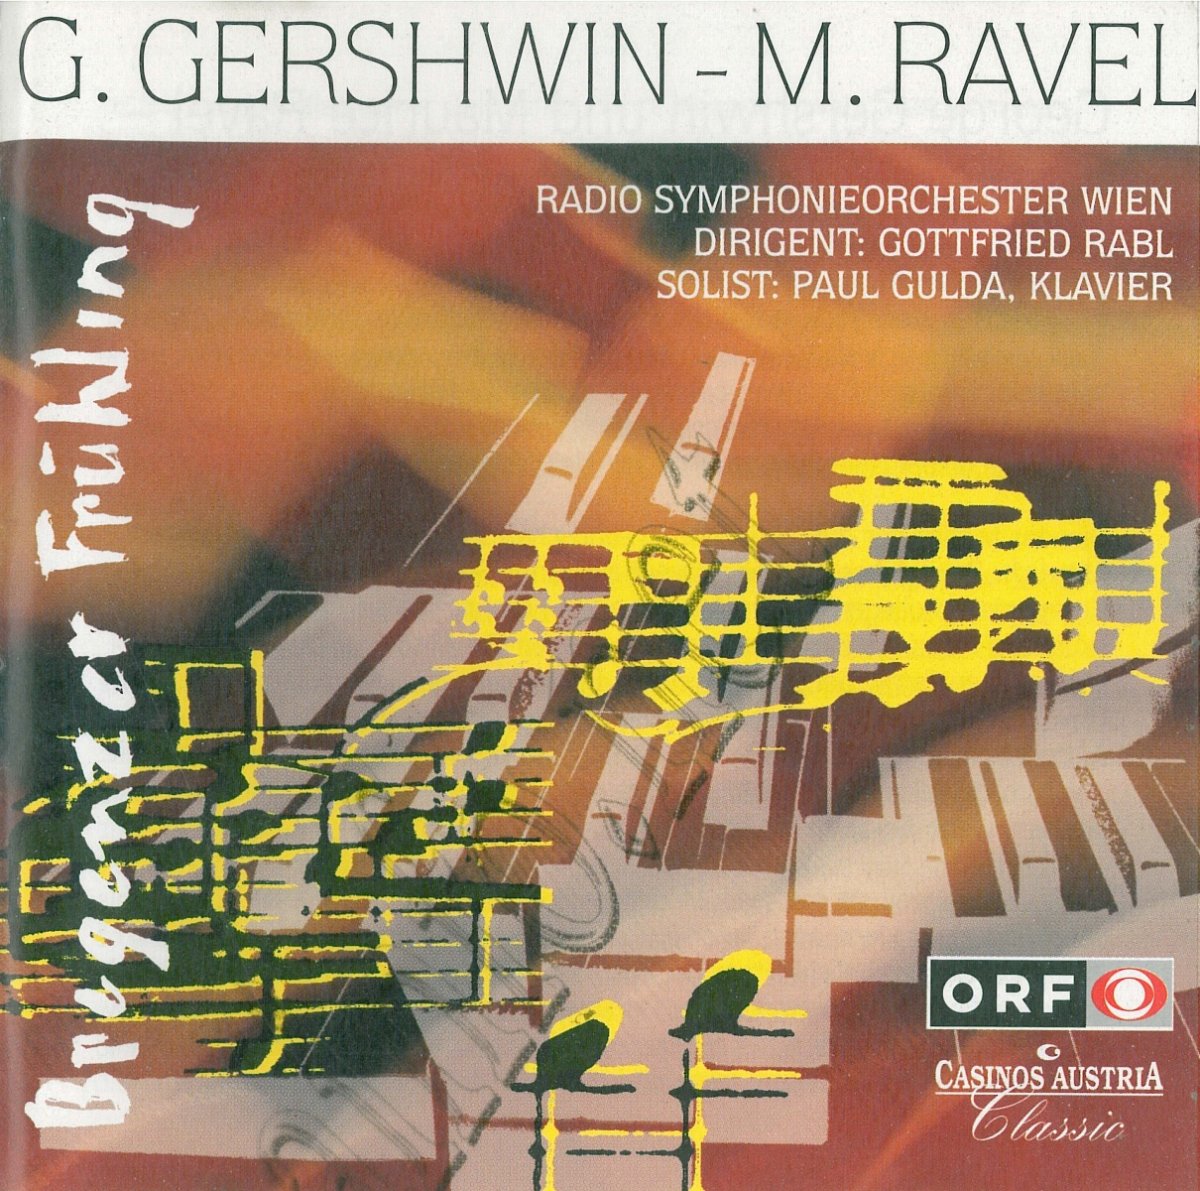 George Gershwin - Maurice Ravel - cliccare qui